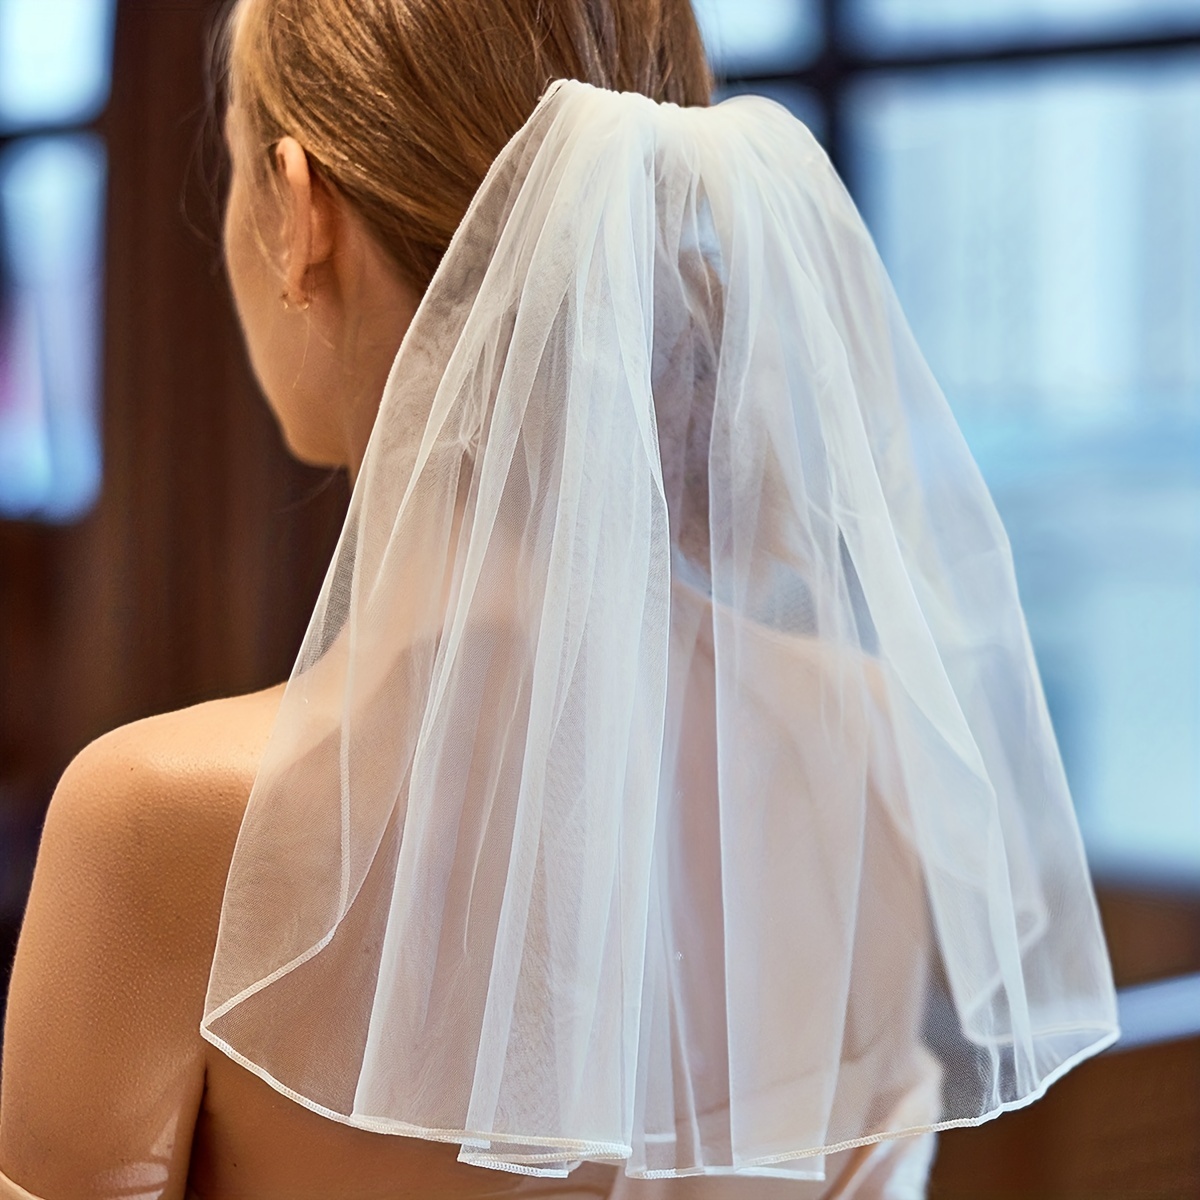 2 Tier Bridal Veil Long Satin Trim White Ivory Tulle Wedding Accessory 3m